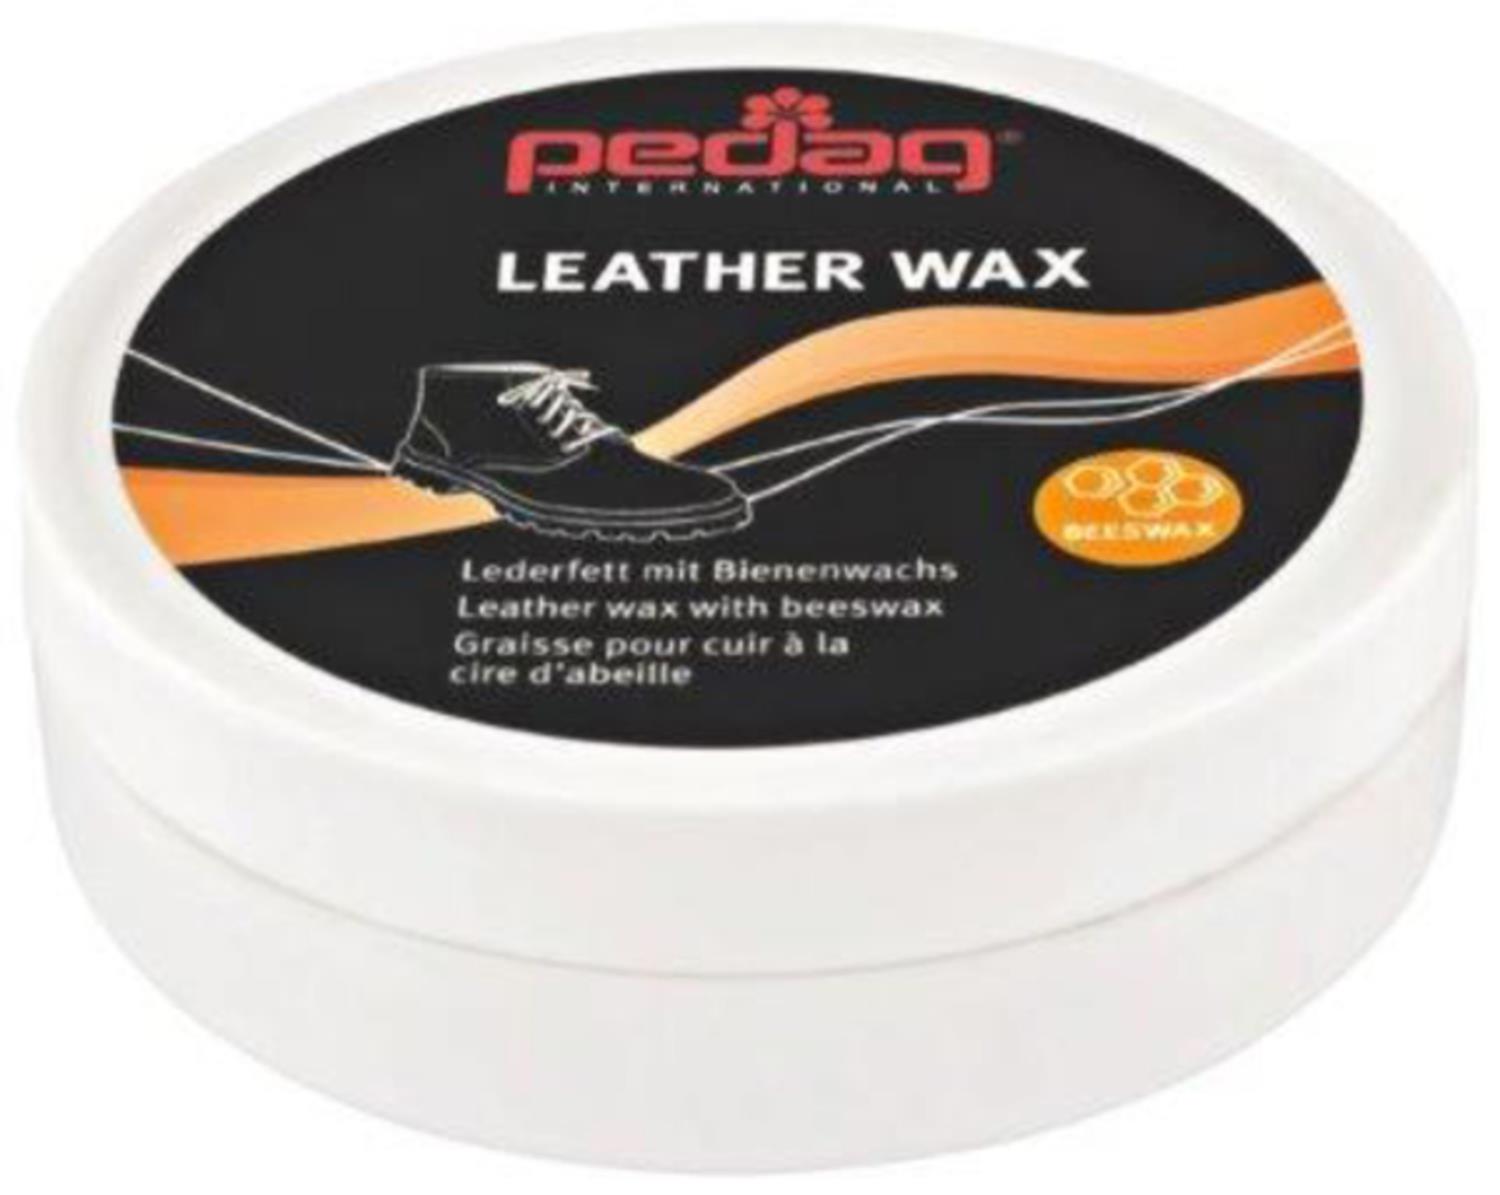 Leather wax